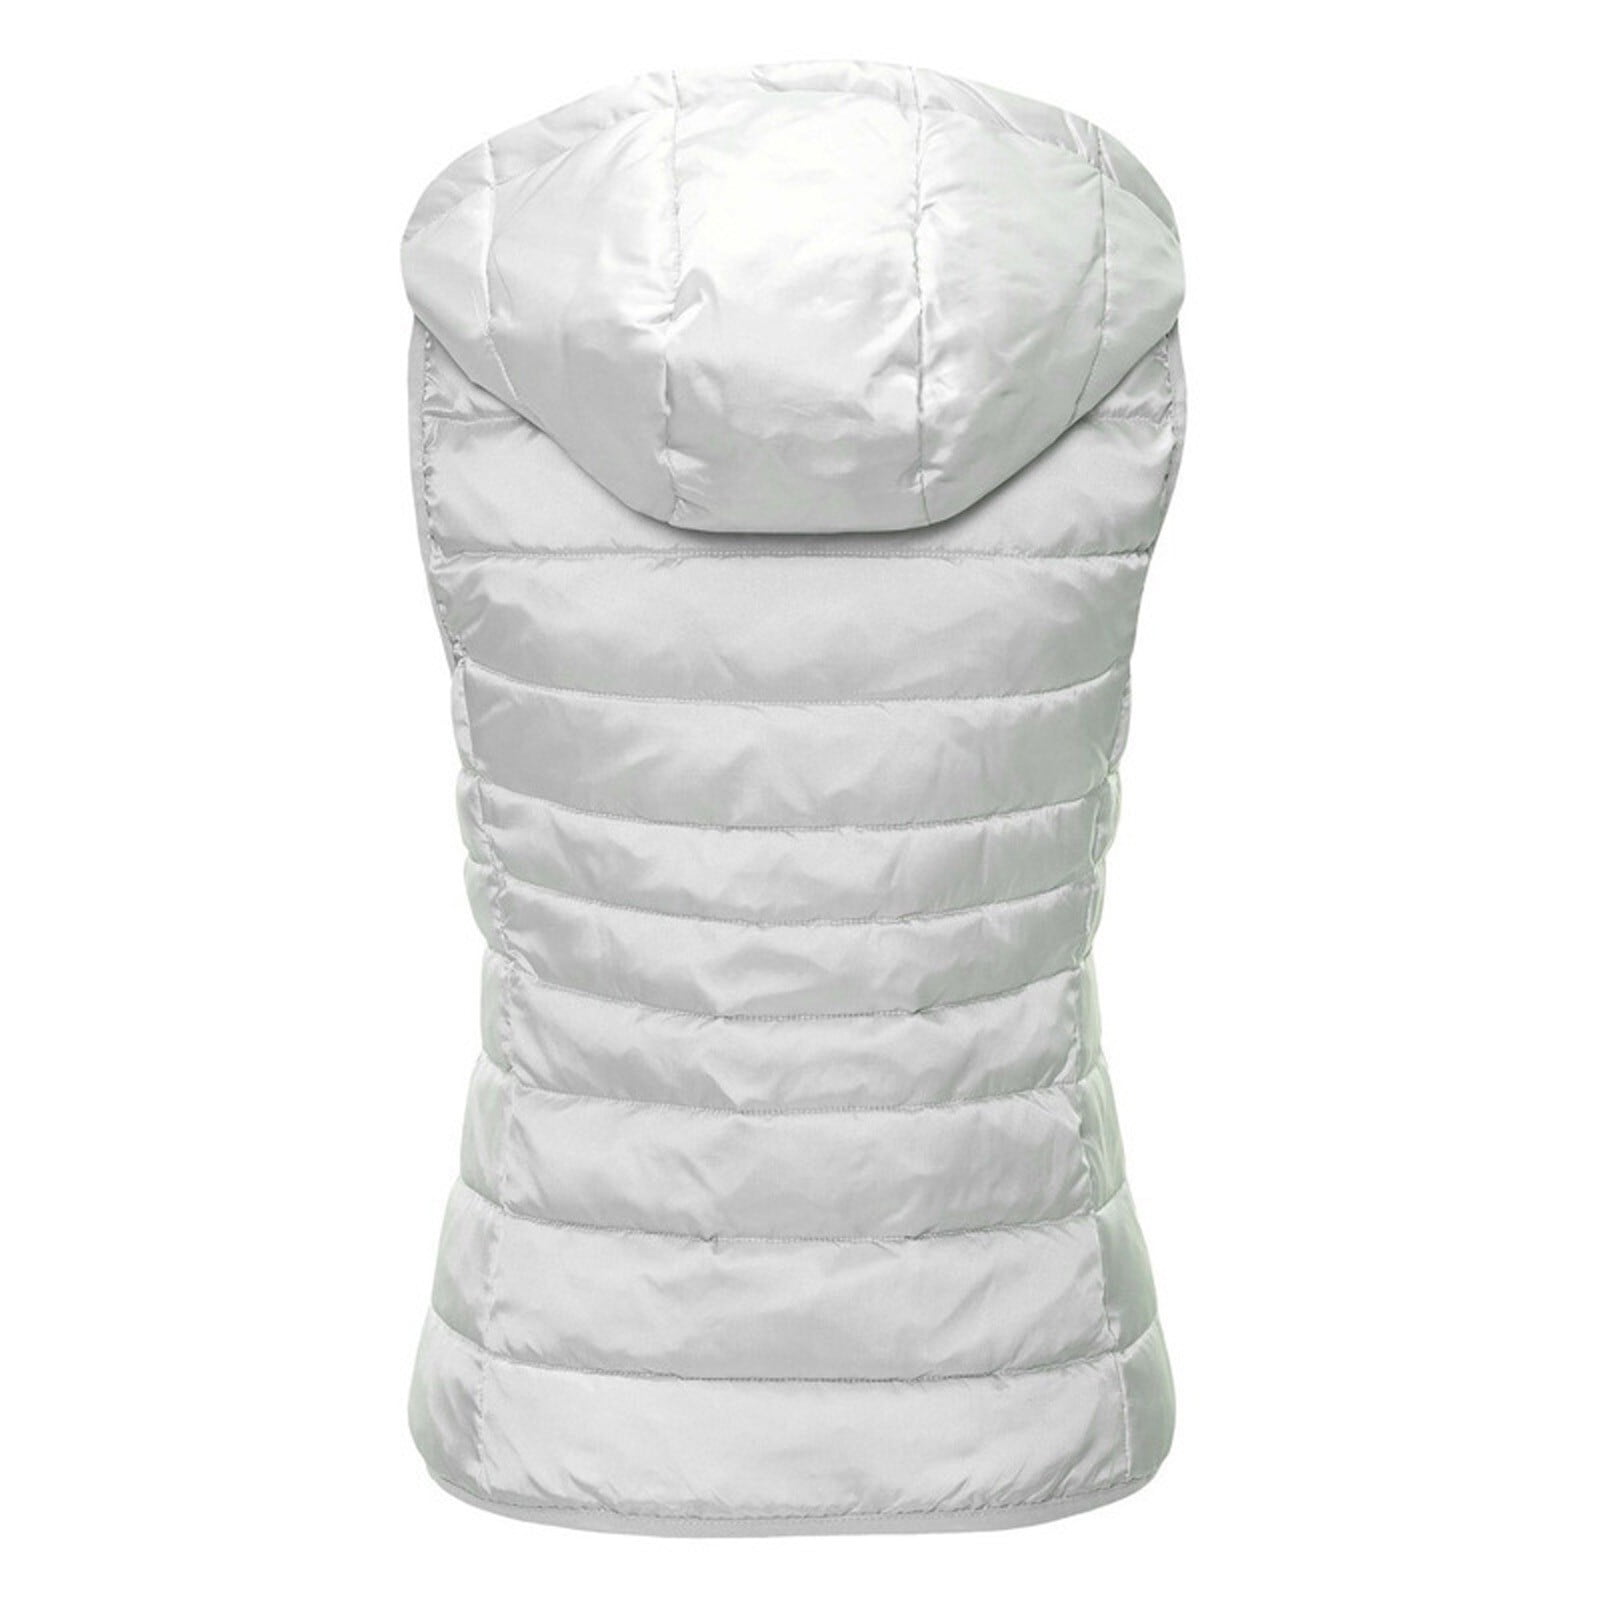 CAICJ98 Oversized Vests For Women Women's Fashion High Neck Zipper